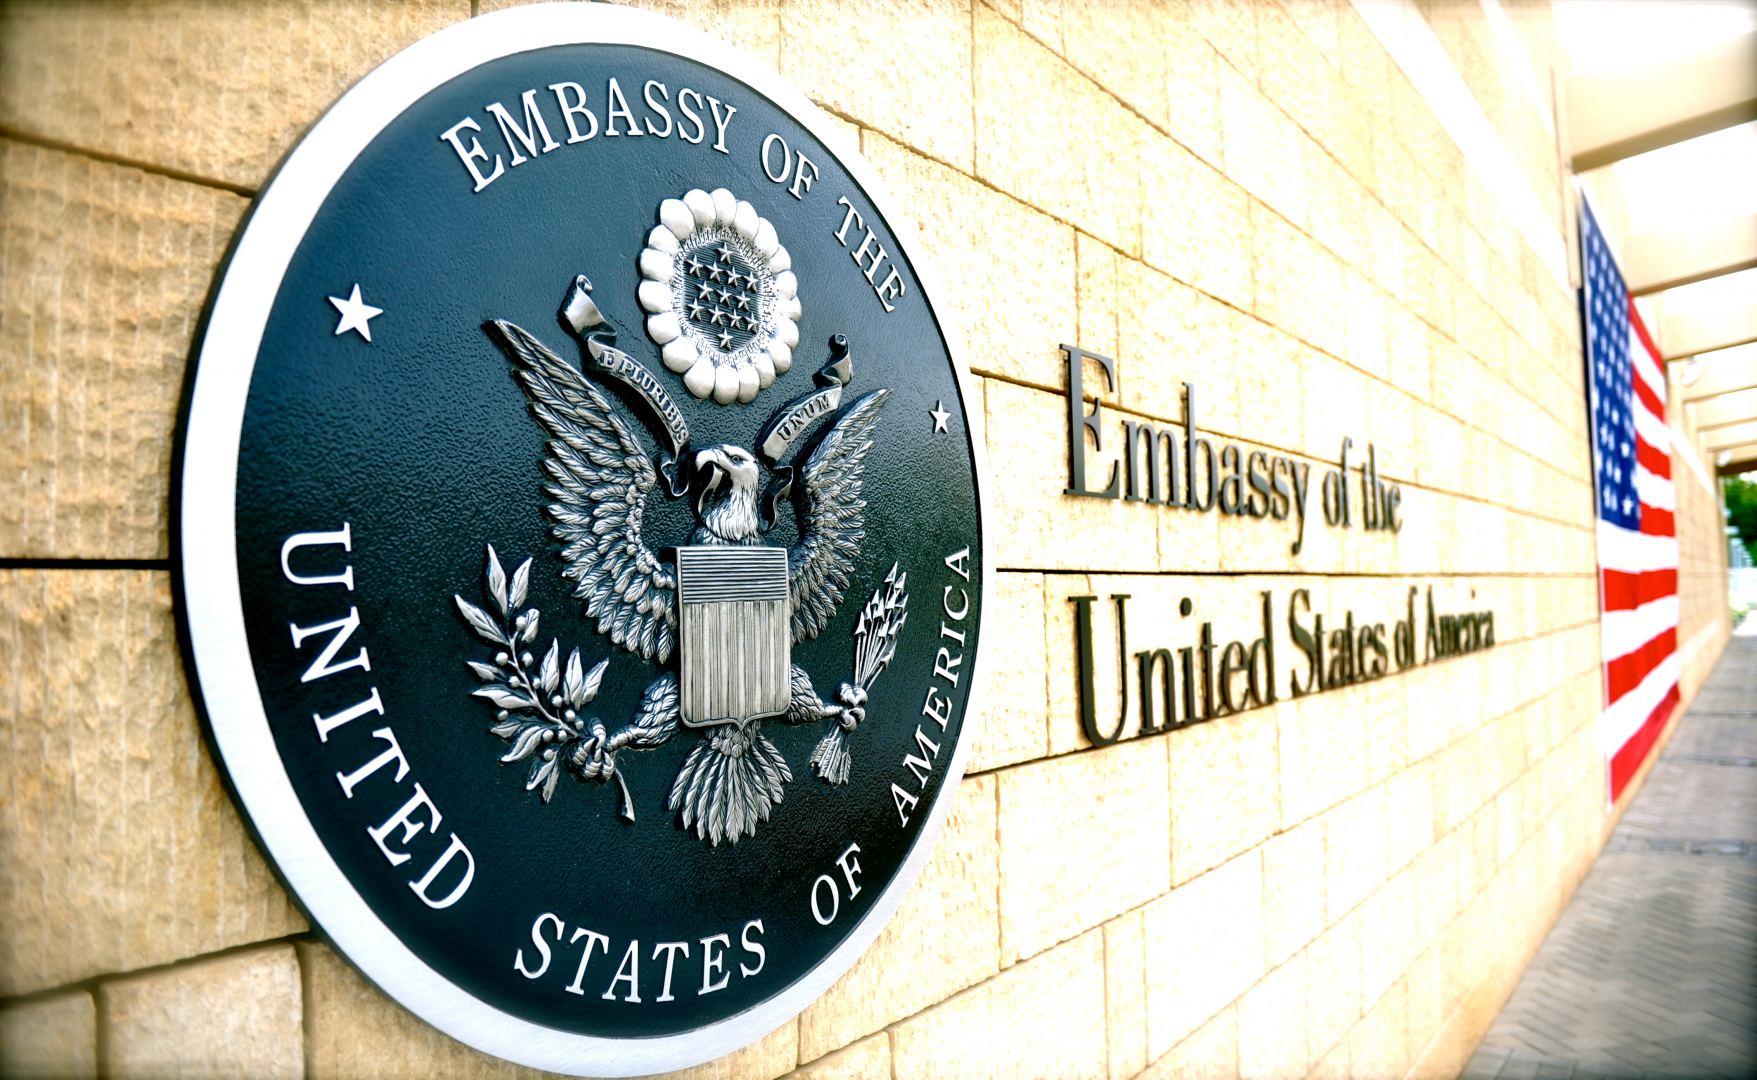 Air raid sirens go off in US embassy in Iraq